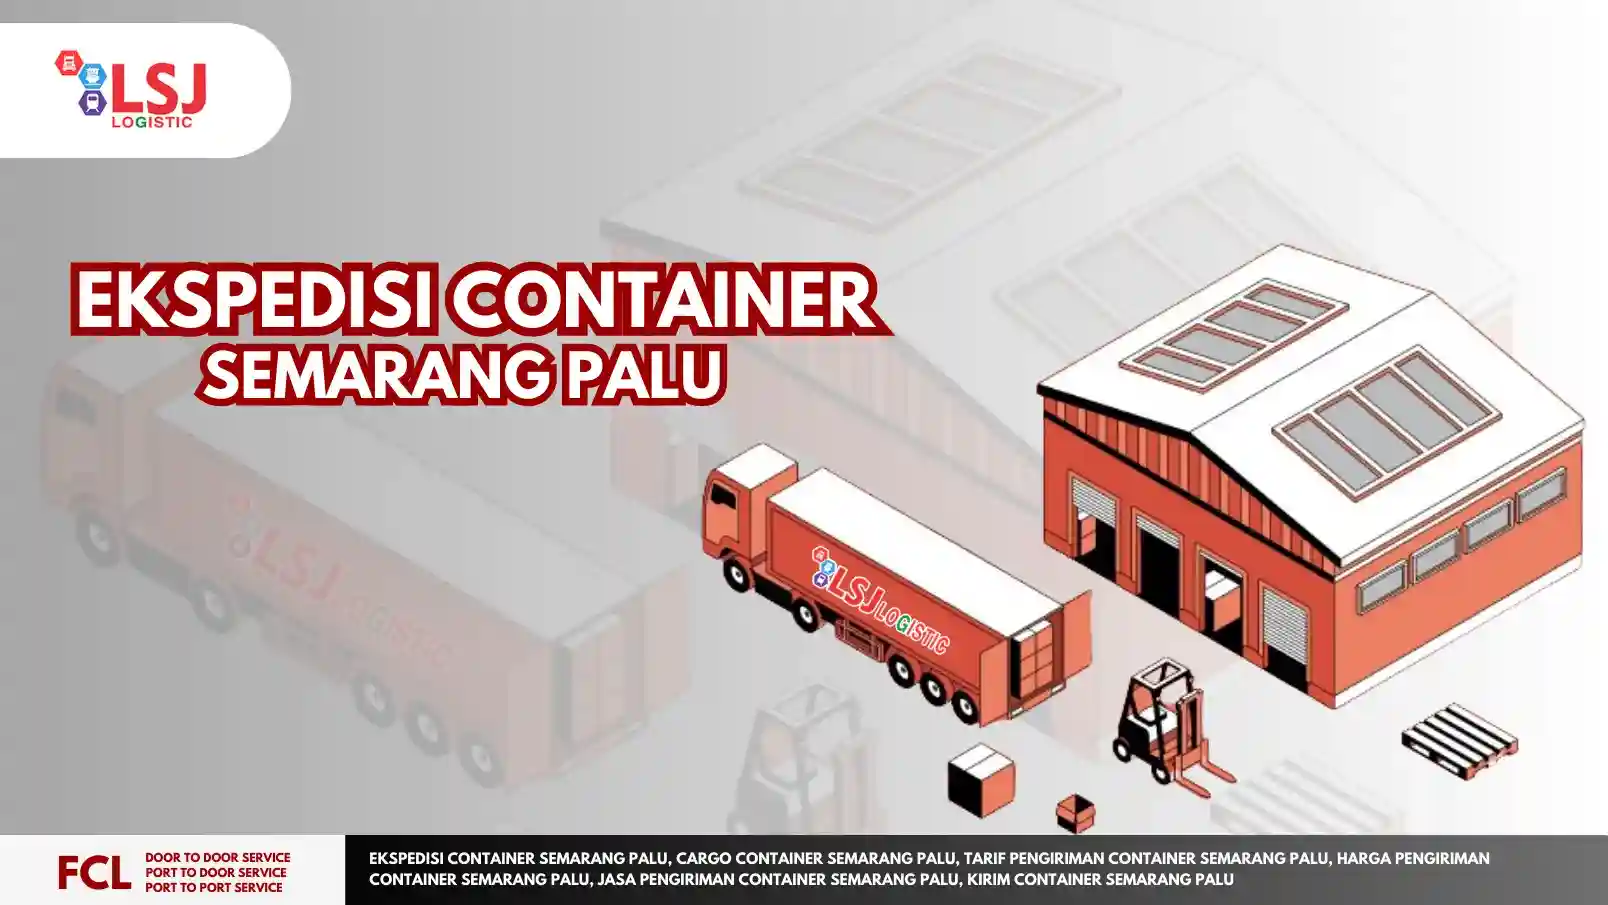 Ekspedisi Container Semarang Palu